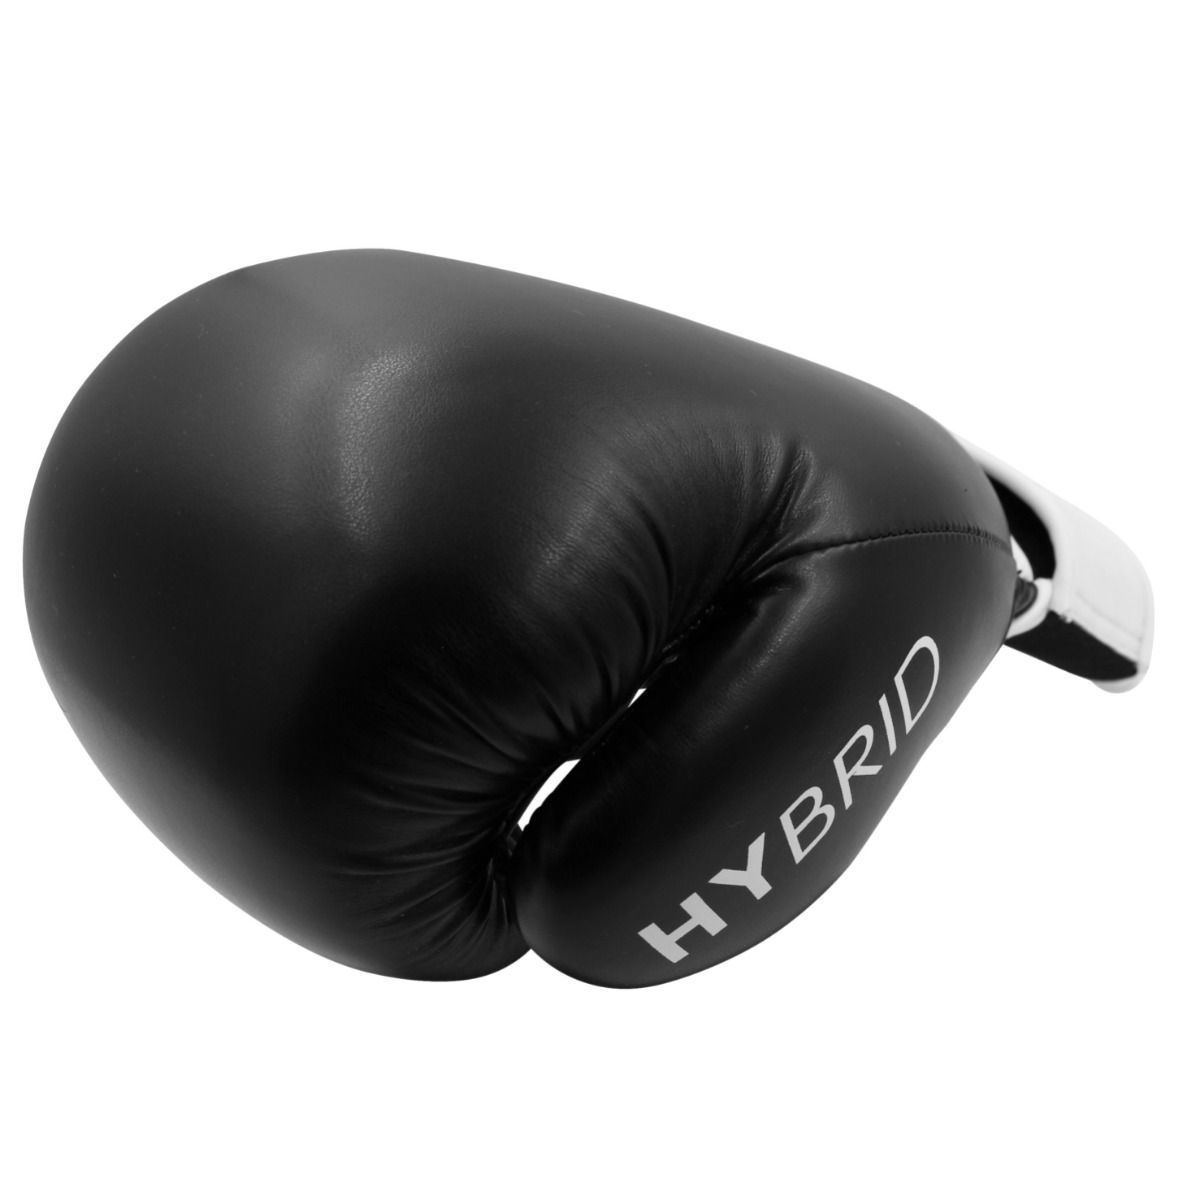 Adidas Hybrid 100 Boxing glove